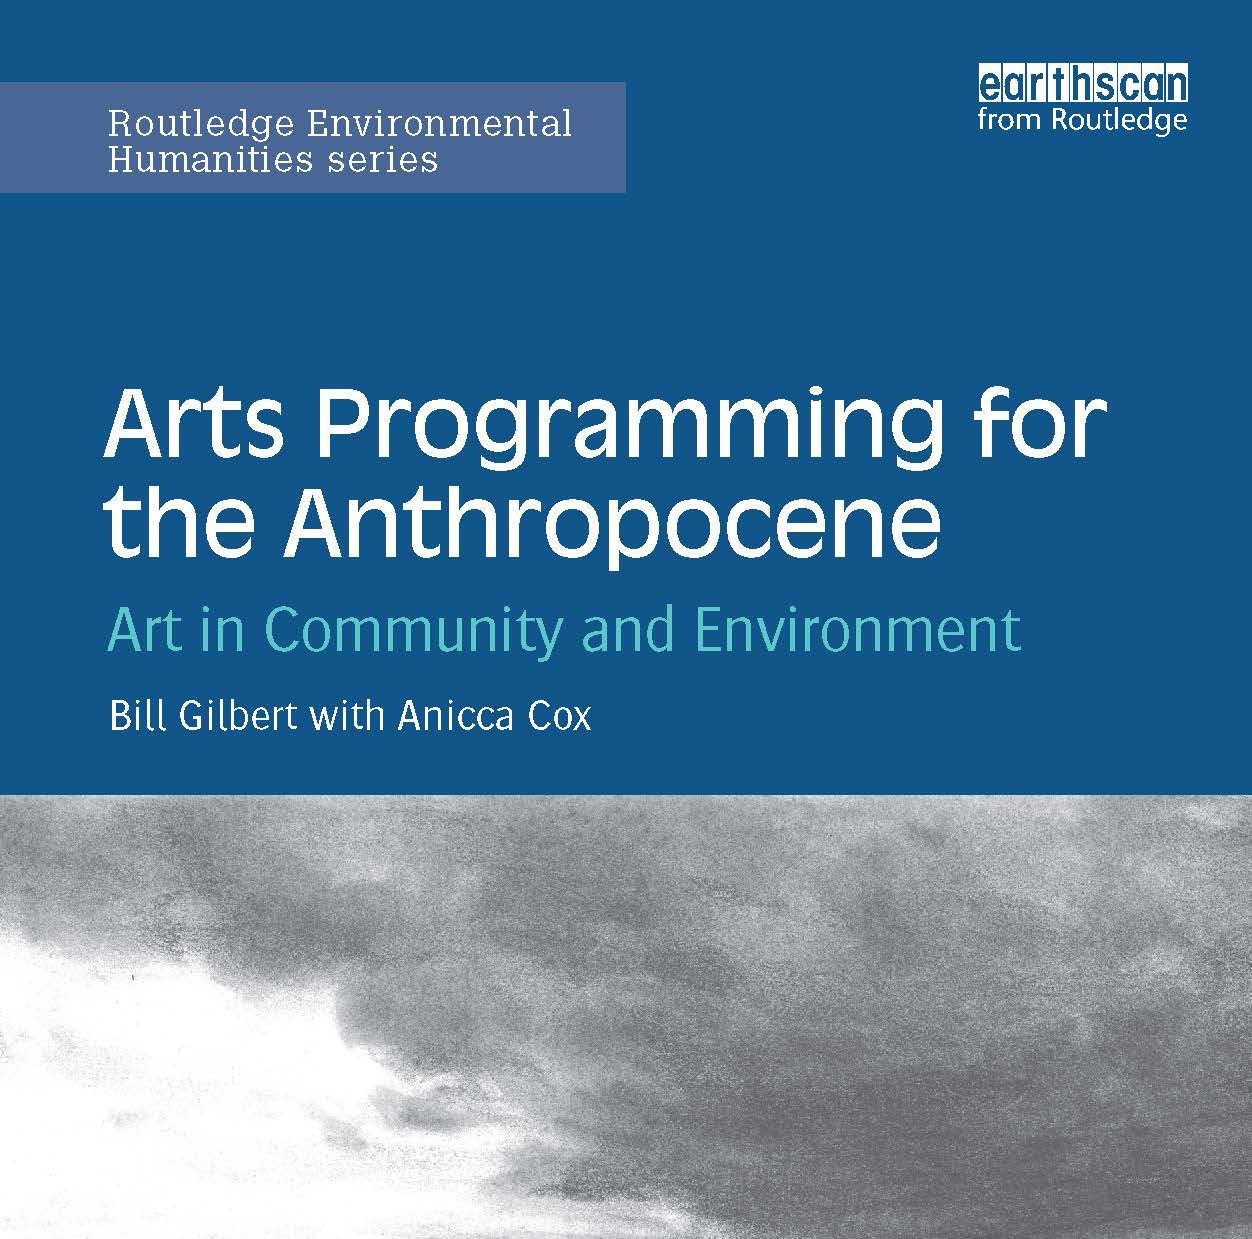 Professor of Art and Ecology Bill Gilbert releases a new book